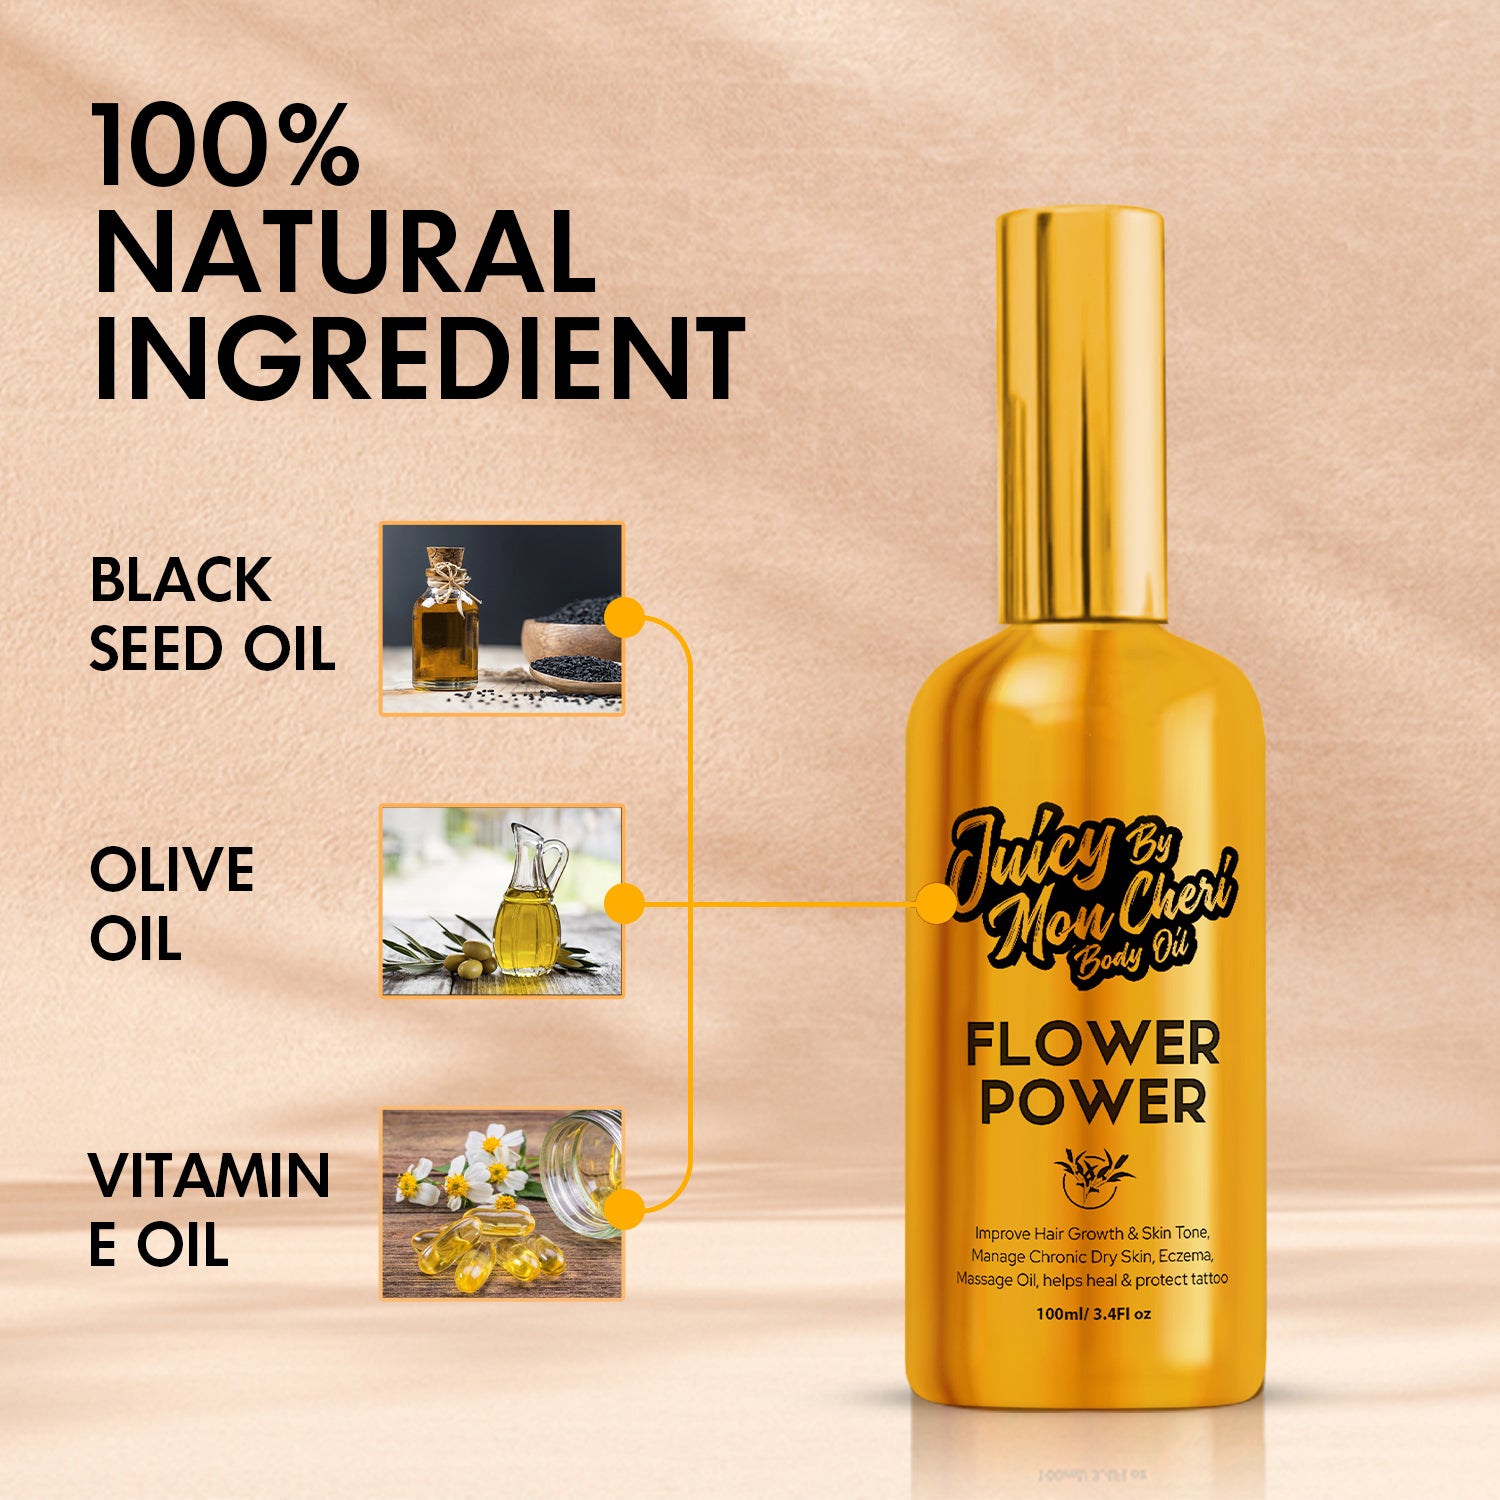 Body Oil Spray Juicy By Mon Cheri Black Seed Body Oil ( Flower Power Scented)